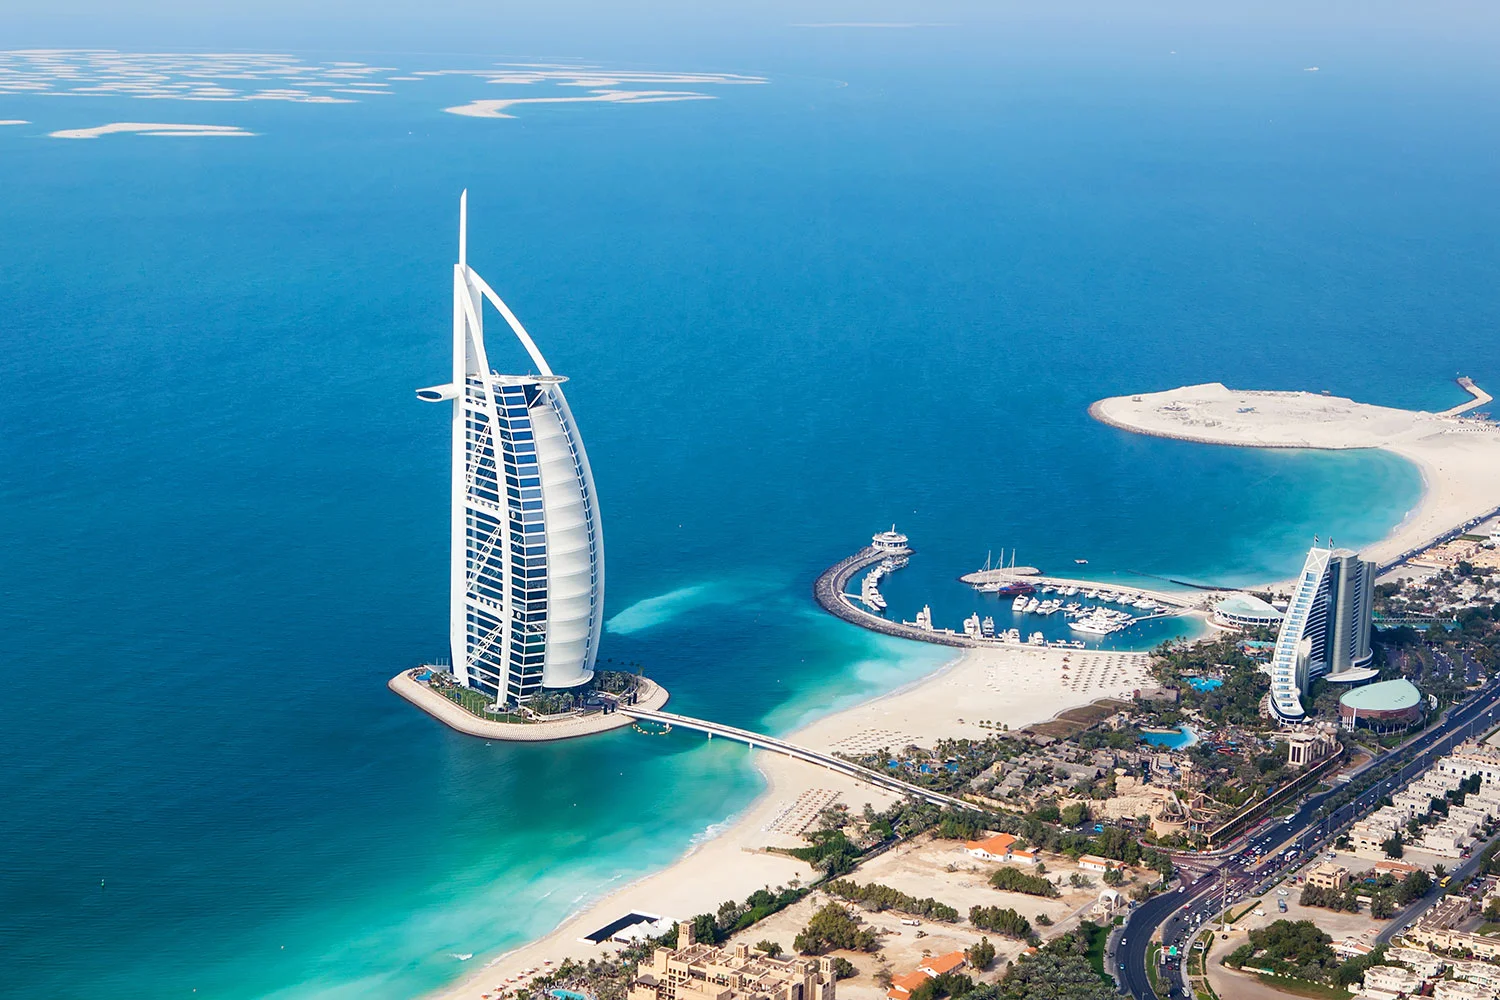  A Perfect 24-Hour Journey in Dubai Unforgettable Experiences Await